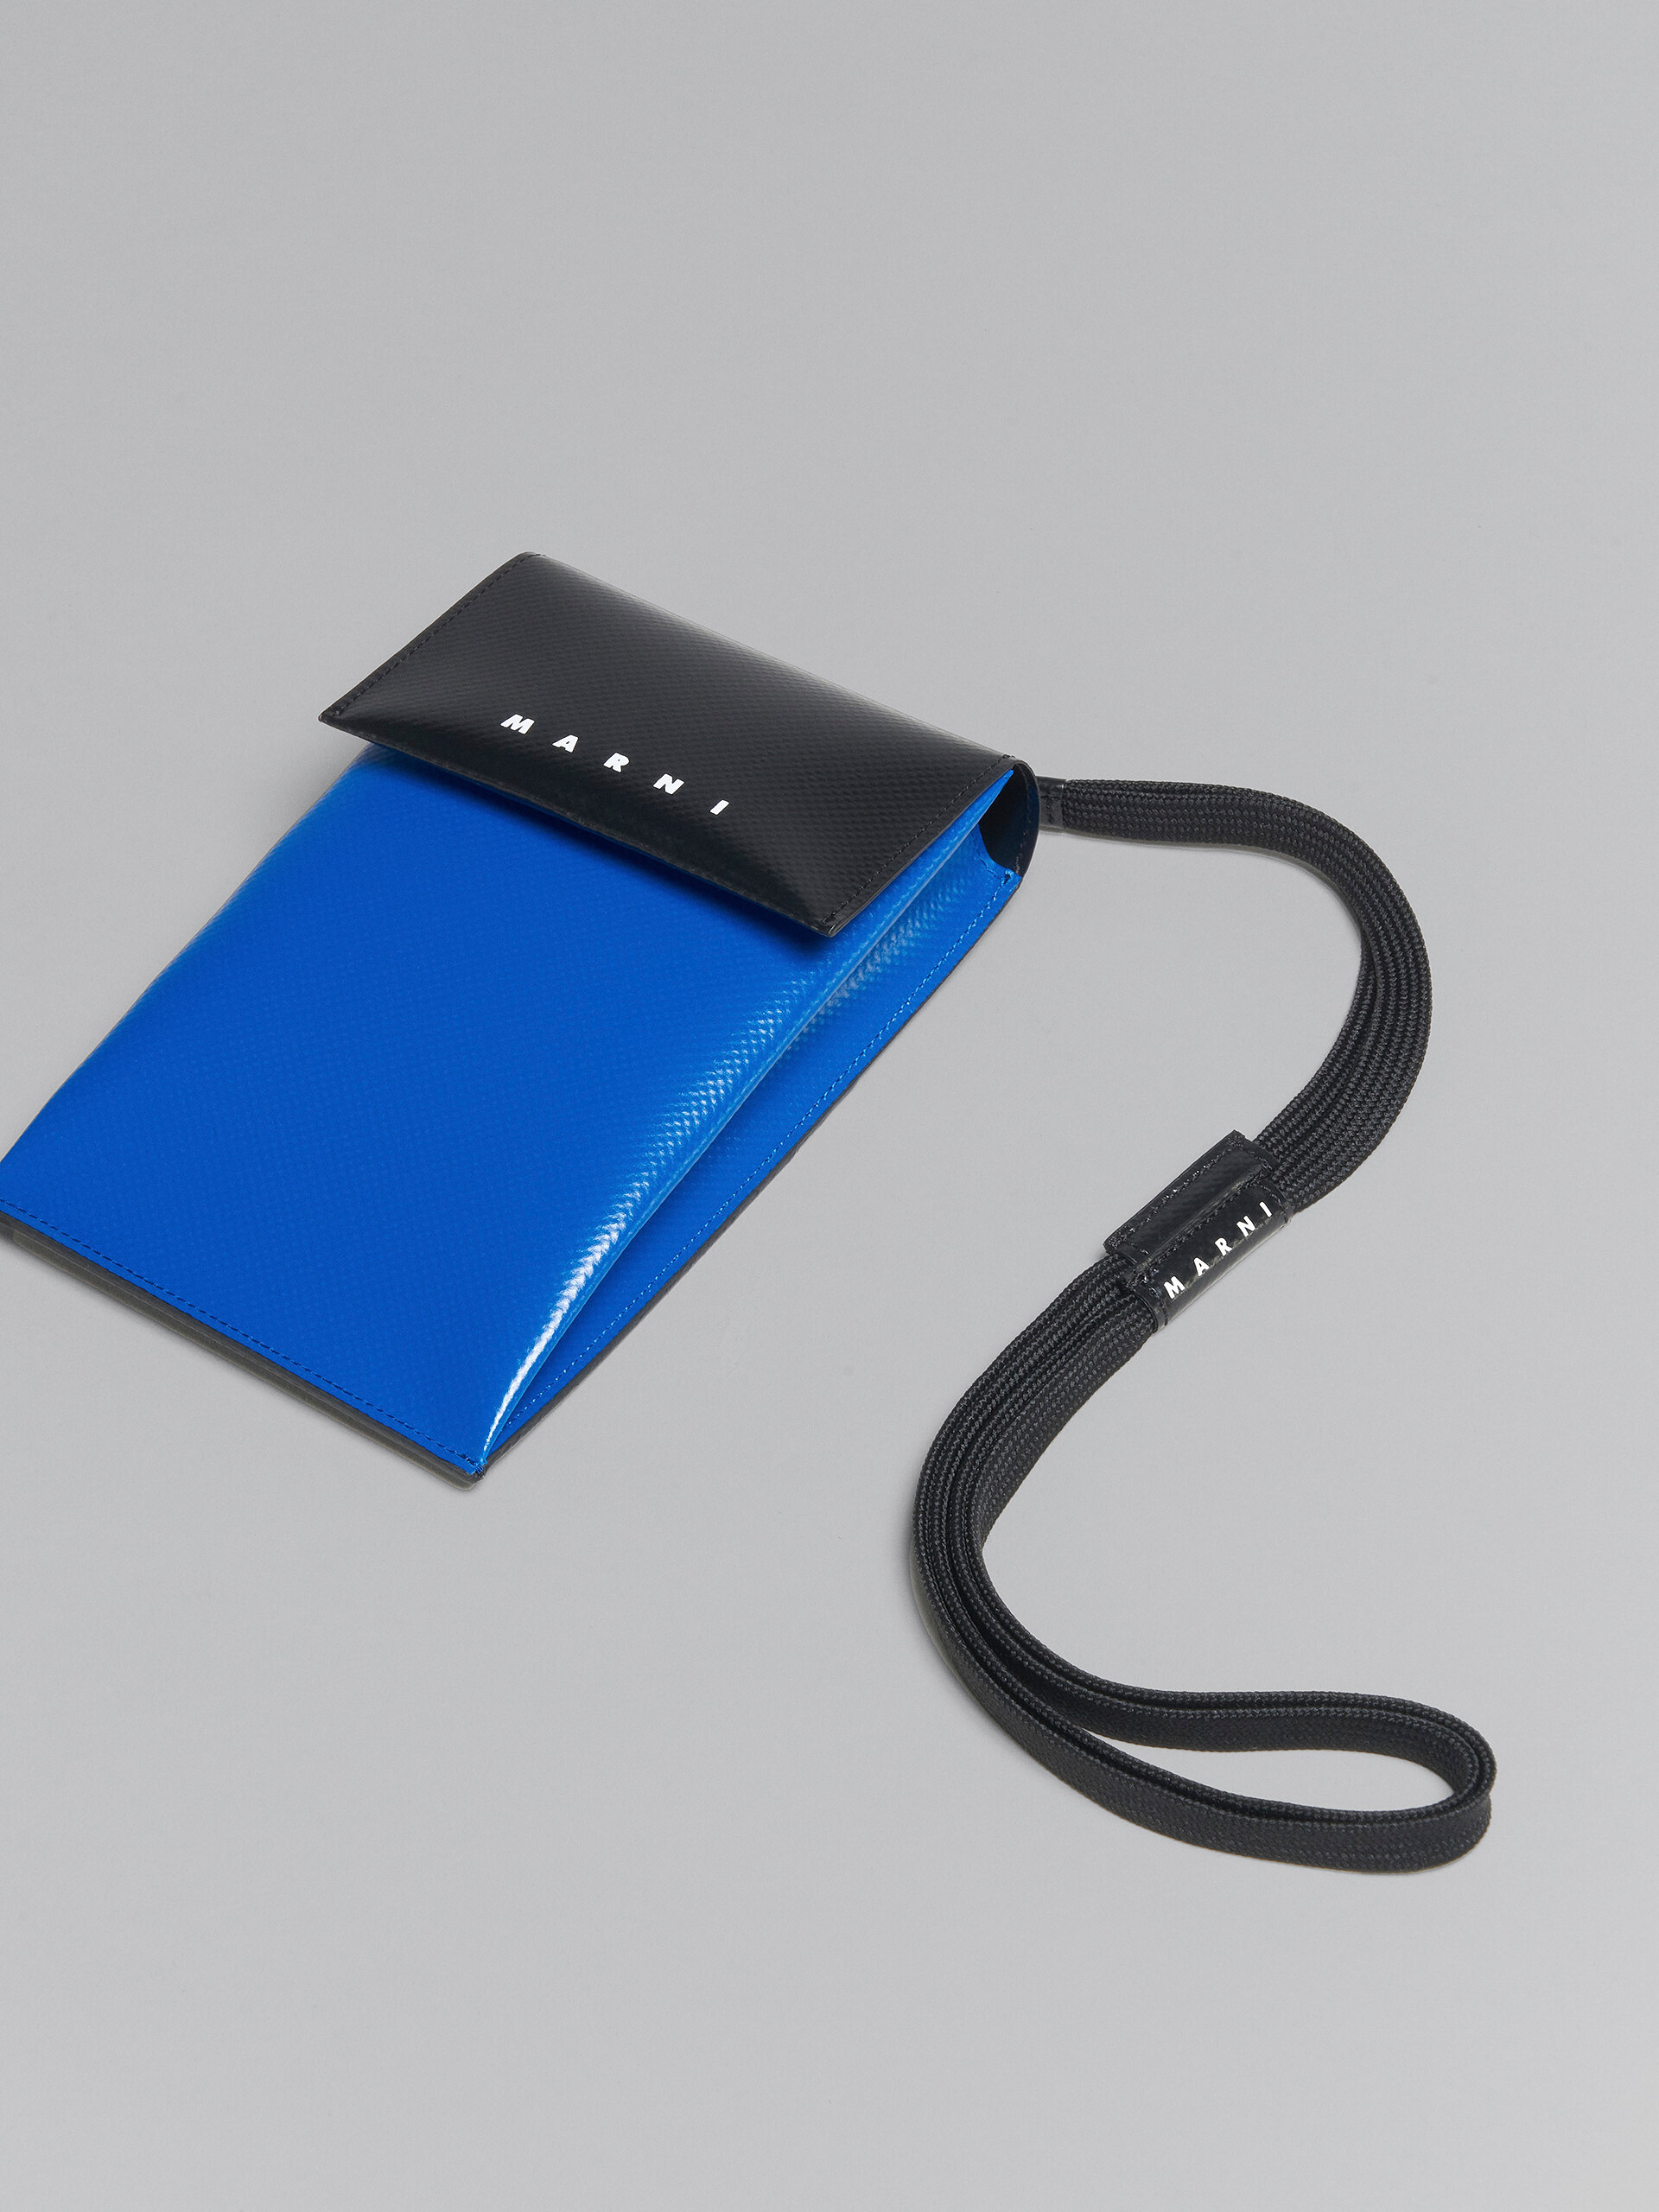 Tribeca blue and black phone case | Marni